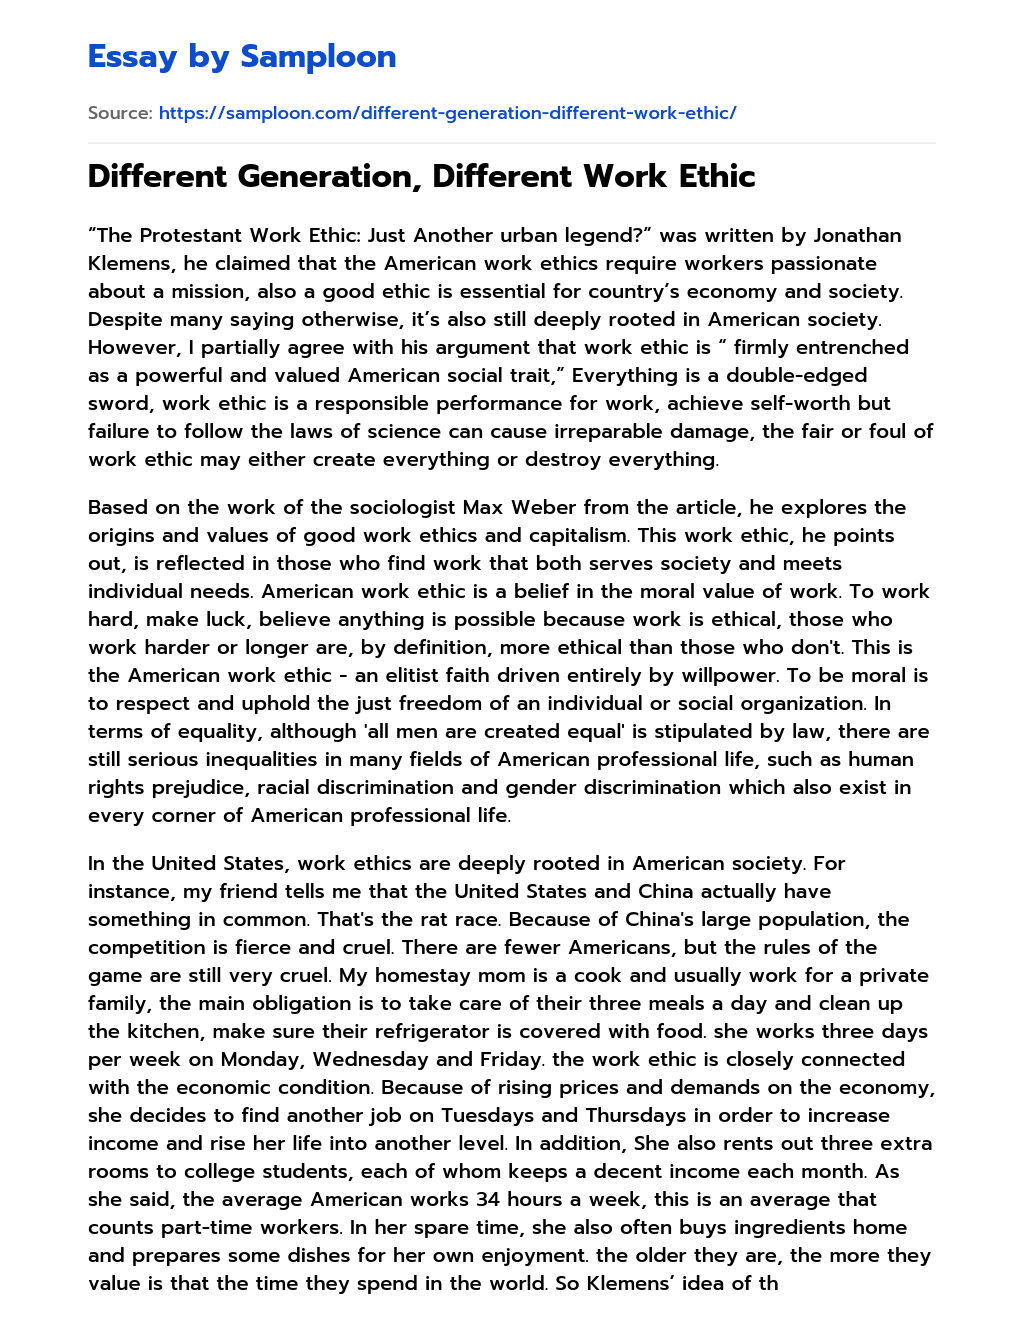 Different Generation, Different Work Ethic essay